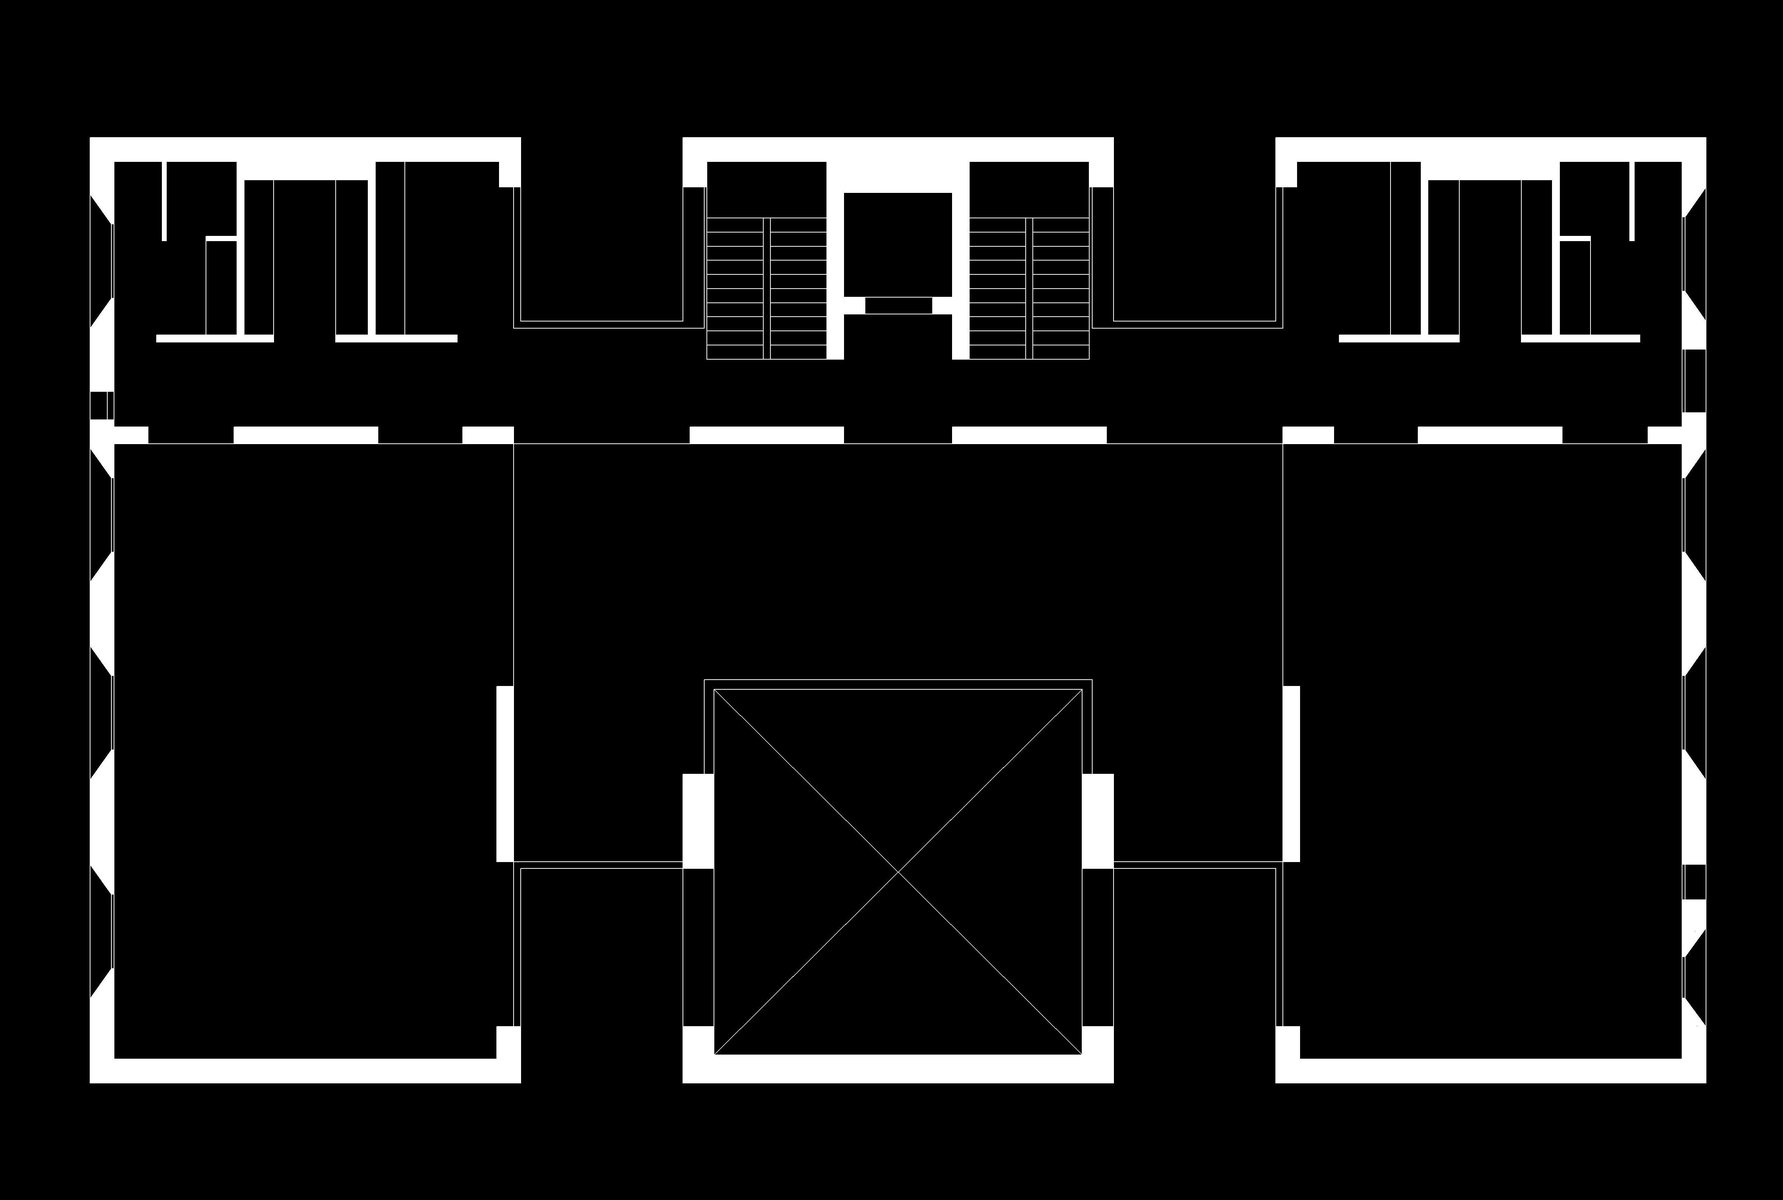 second floor plan 1.jpg